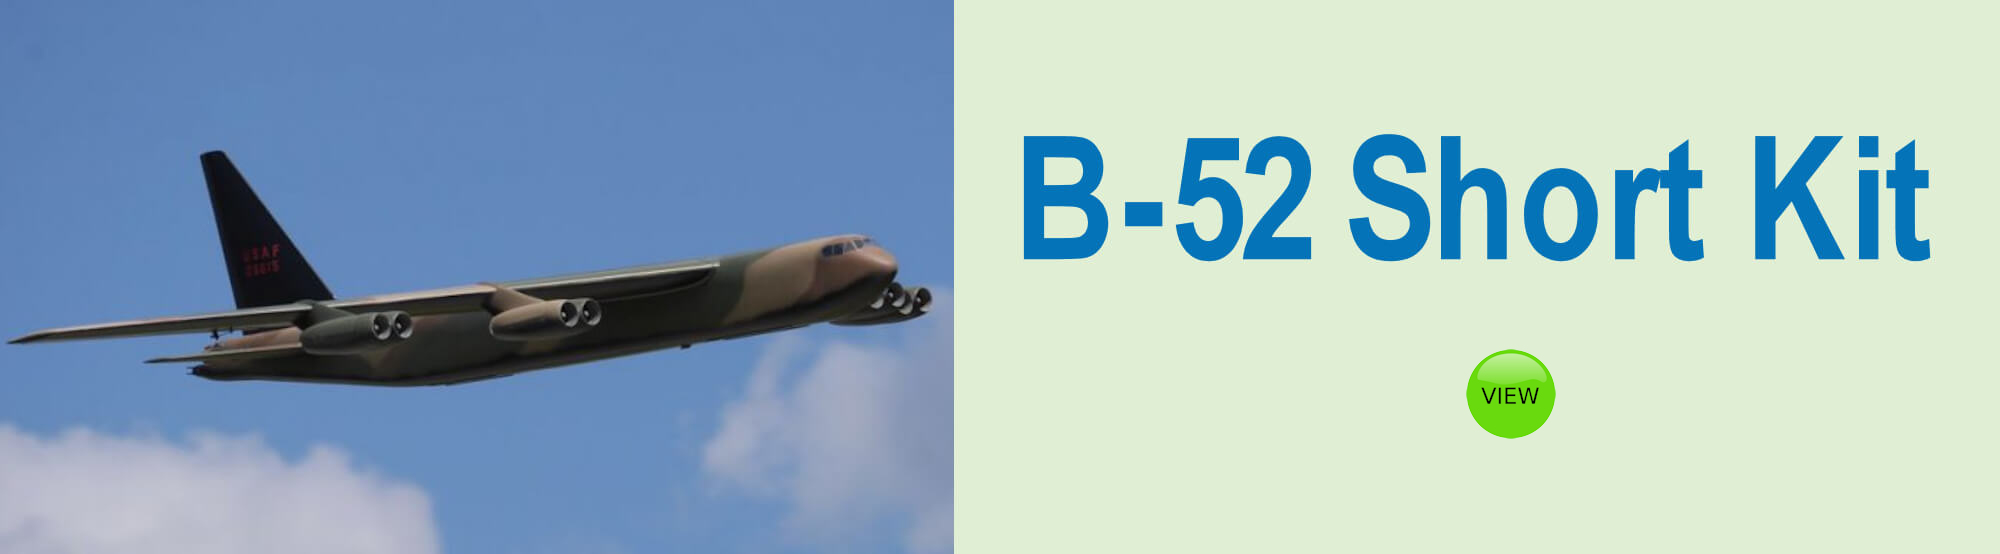 View the B-52 Short Kit